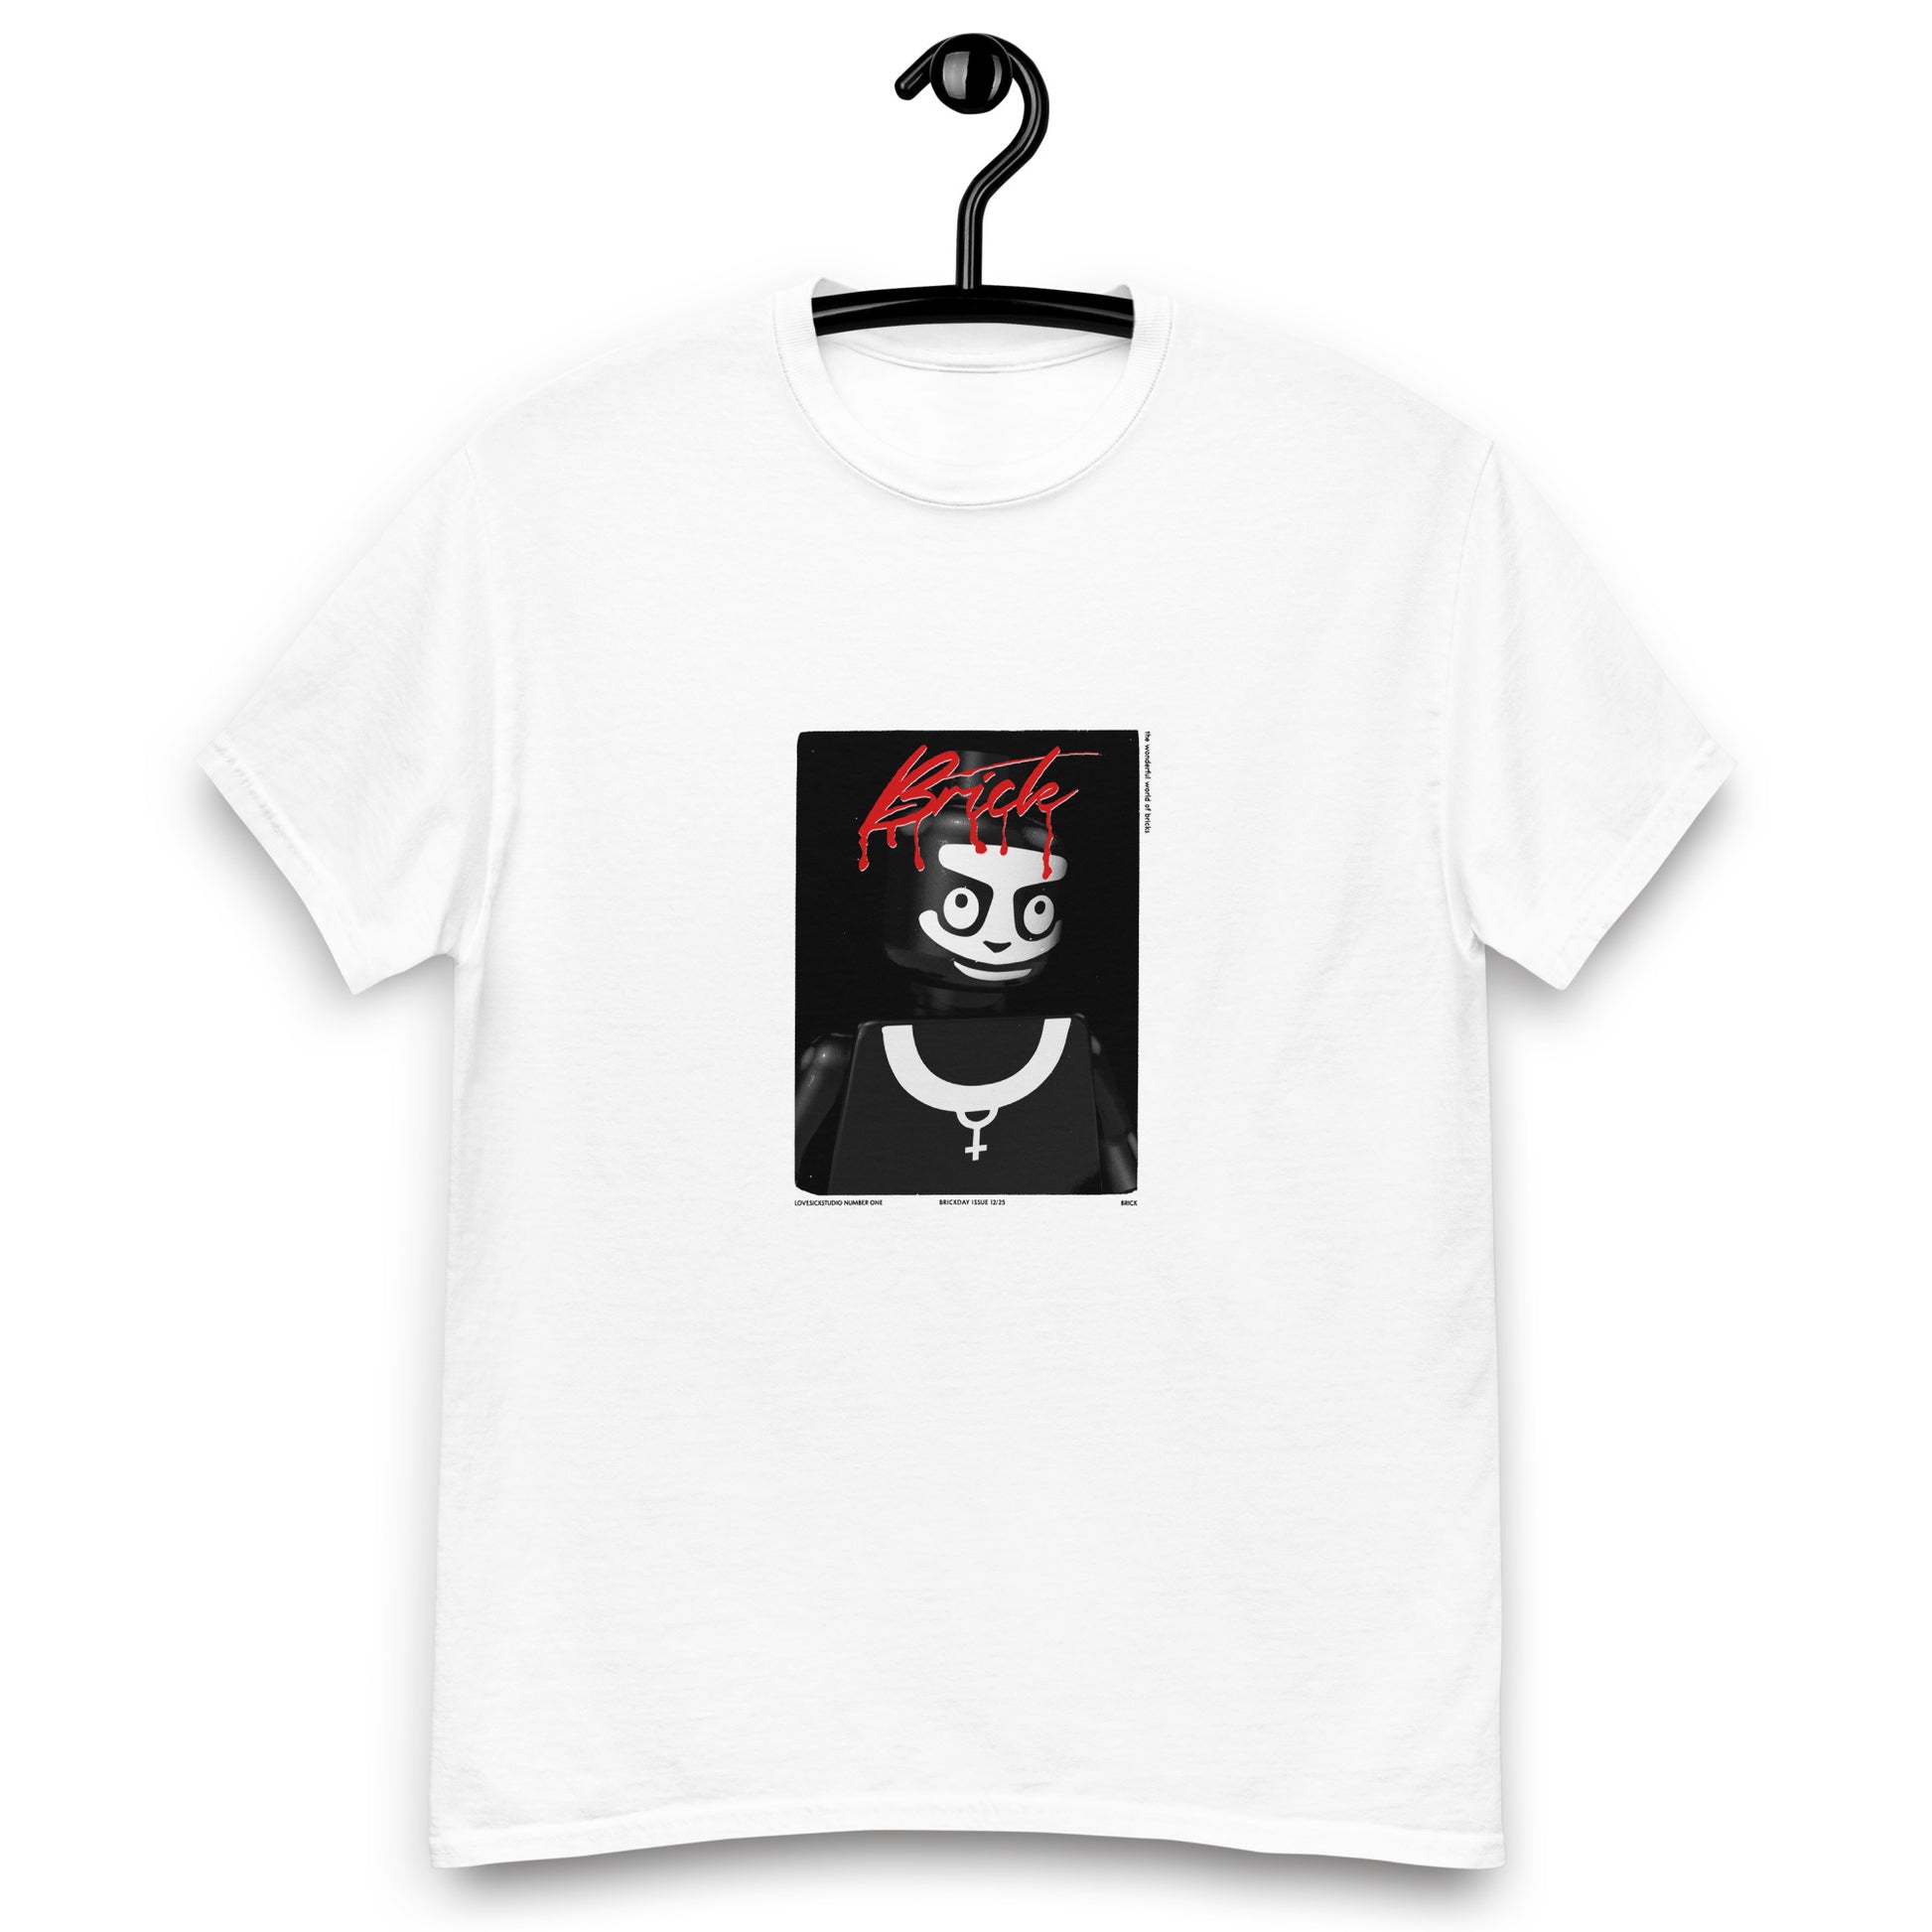 Playboi Carti - @ MEH CLOTHING | Essential T-Shirt